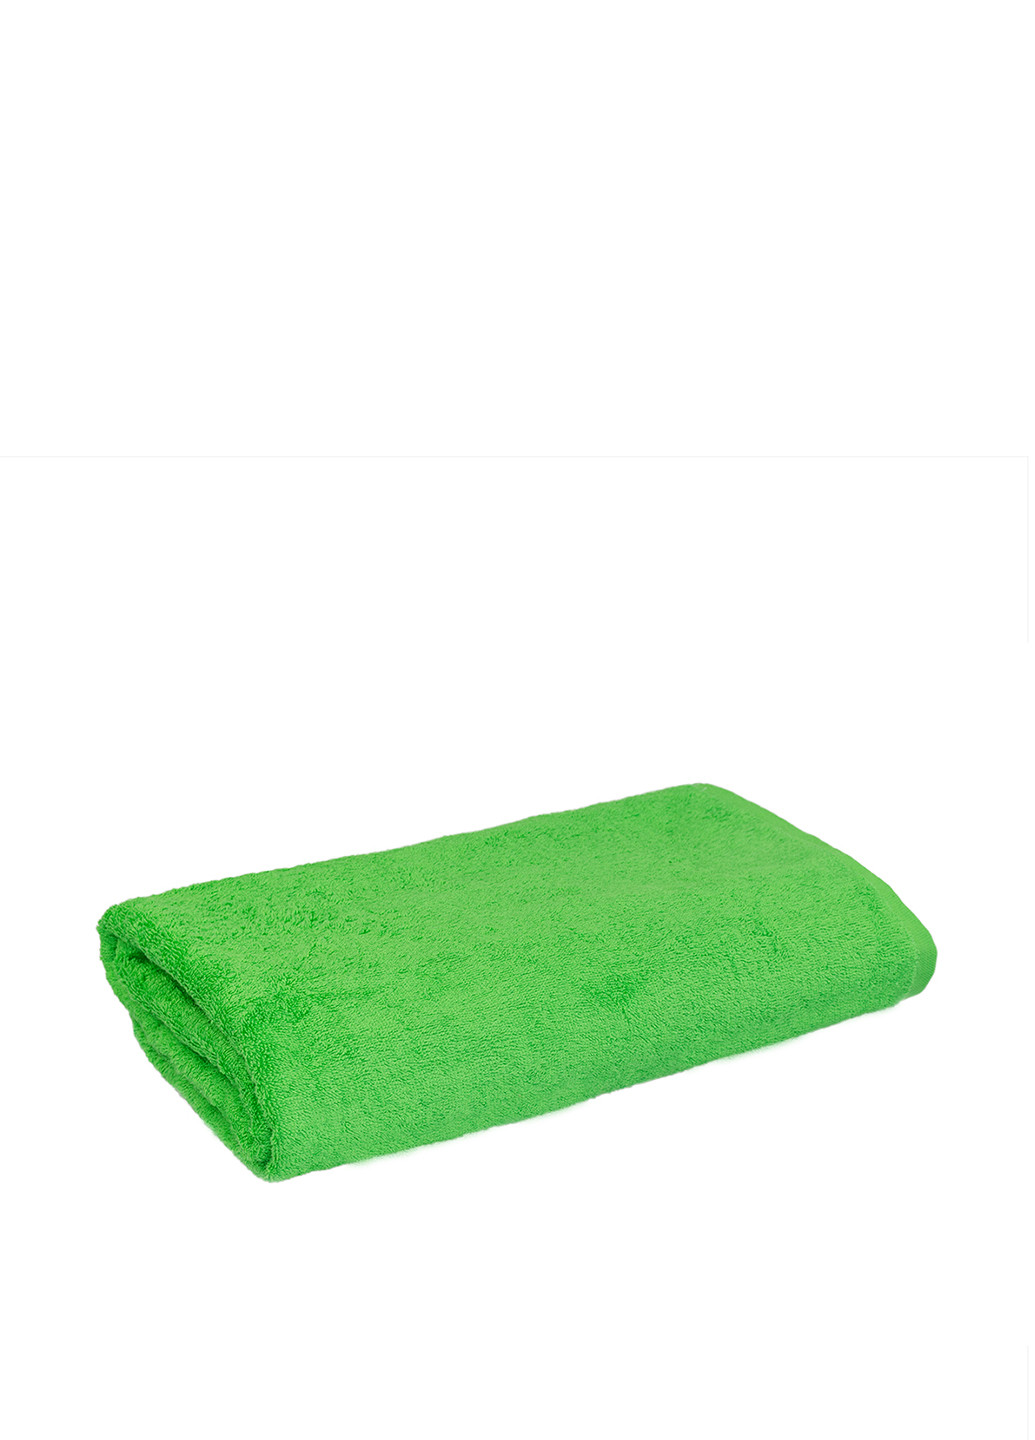 No Brand полотенце, 100х150 см однотонный зеленый производство - Туркменистан